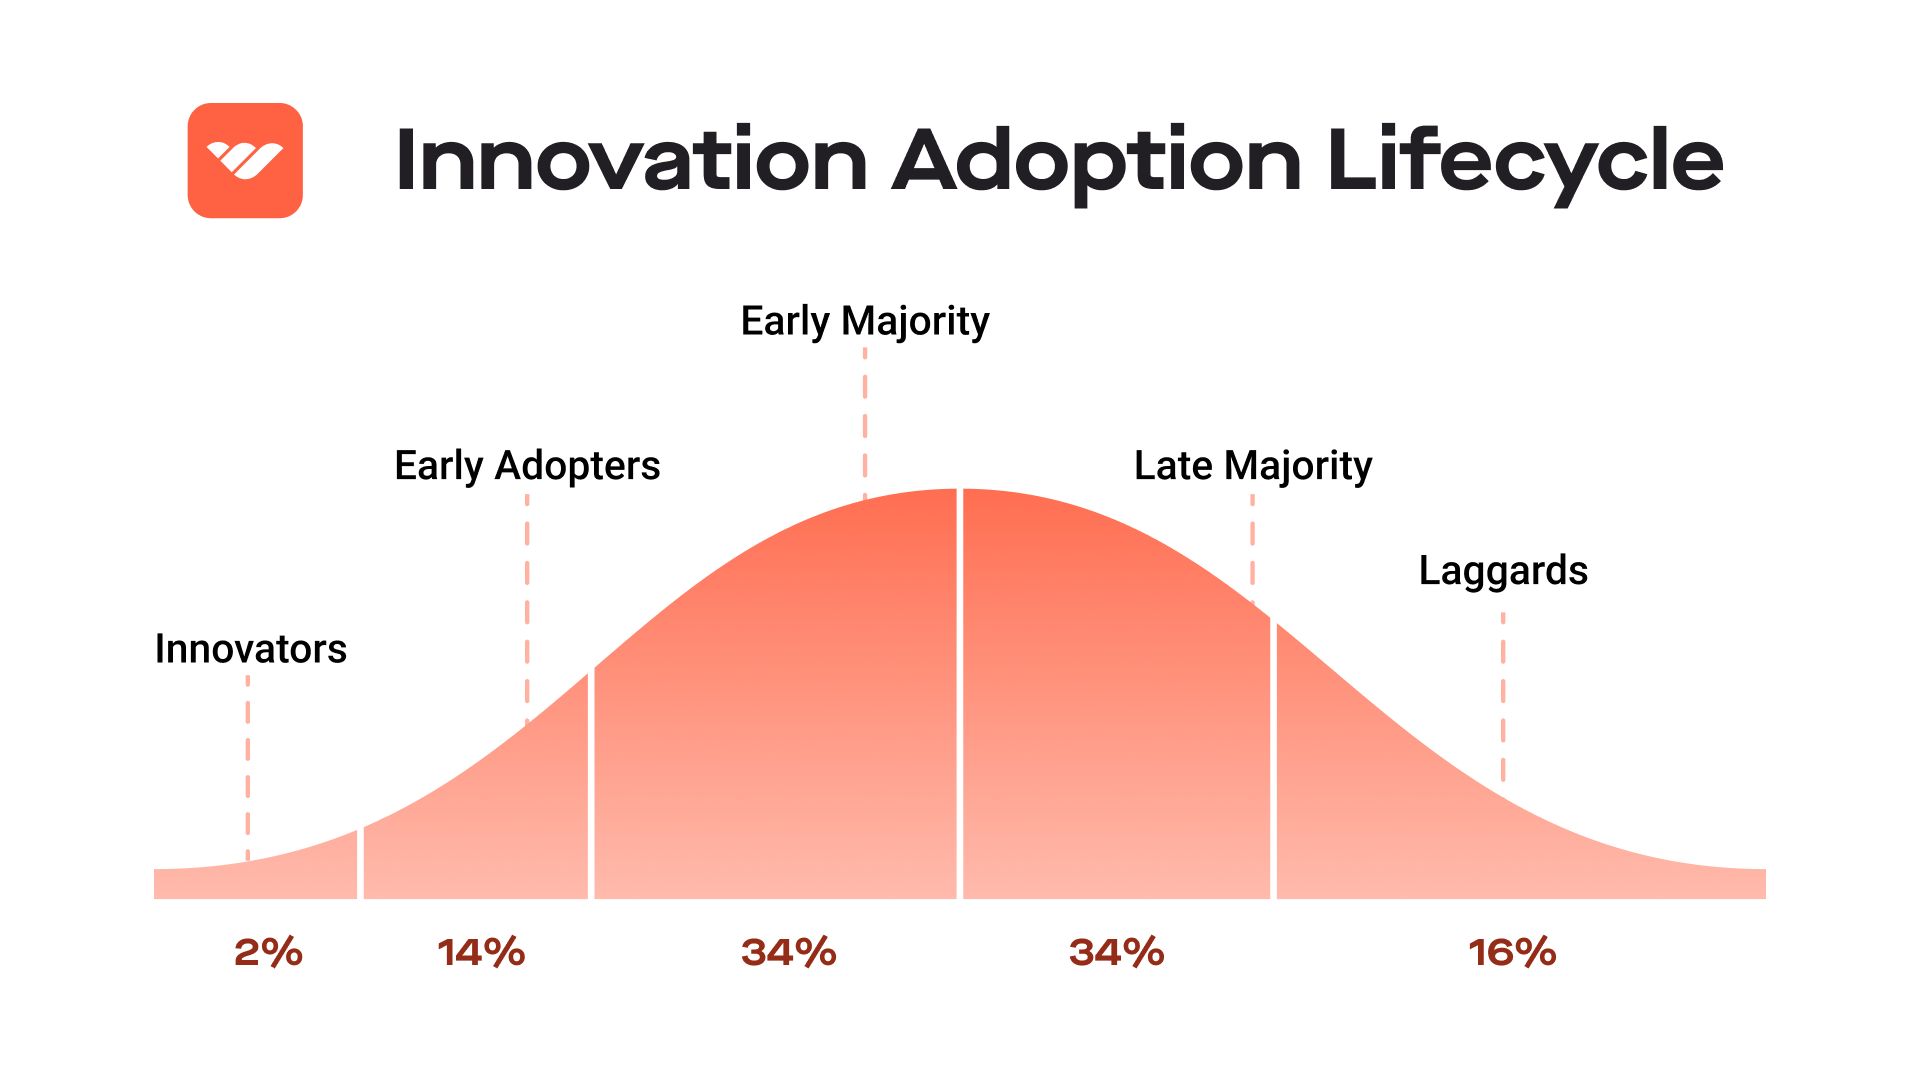 Innovation Adoption Lifecycle diagram